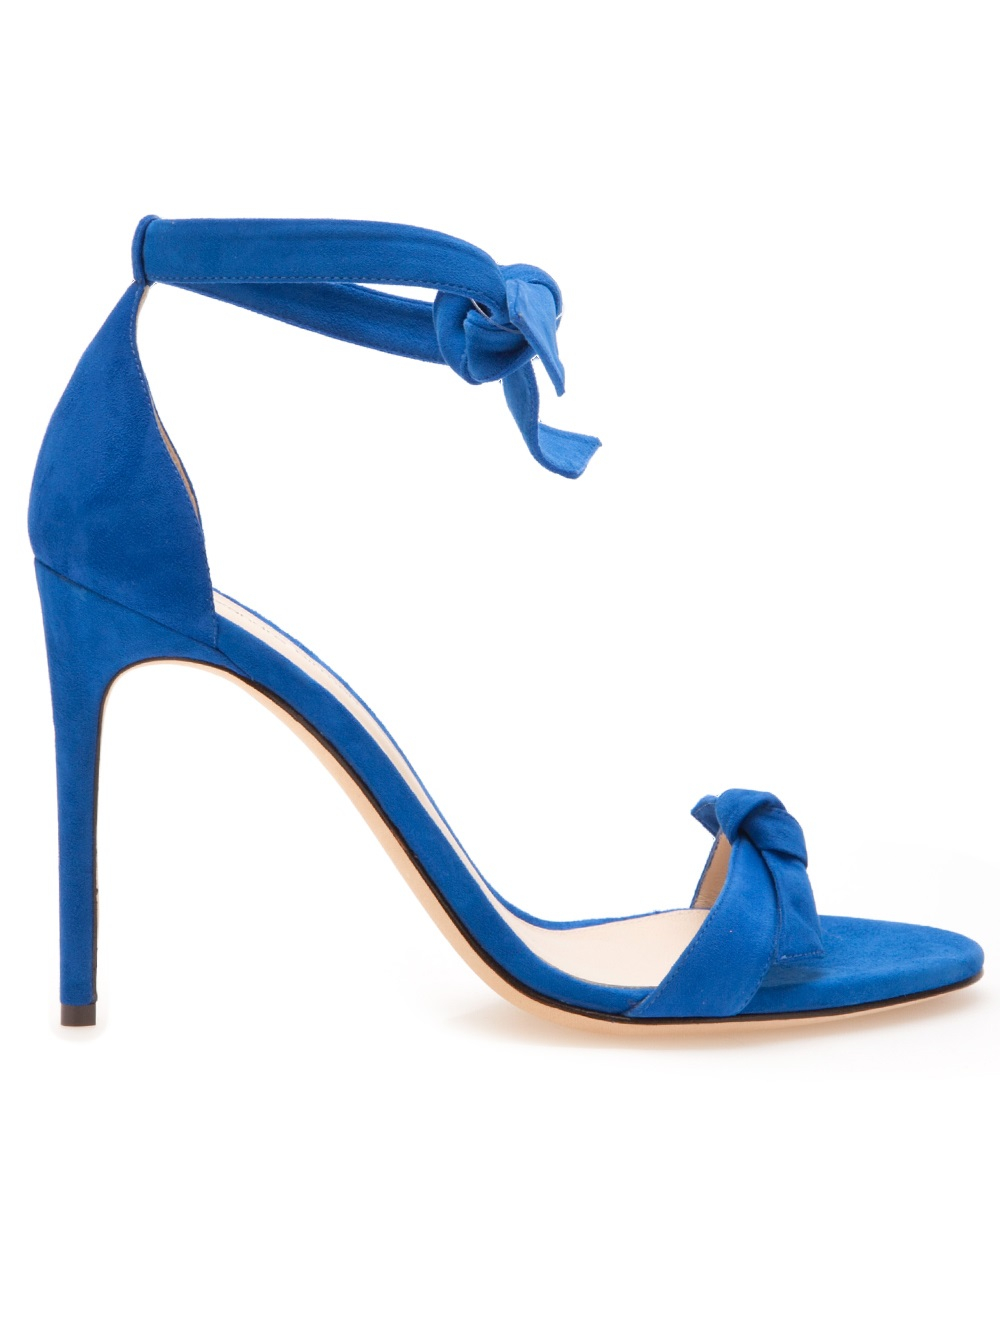 Lyst - Alexandre Birman Clarita Sandal in Blue